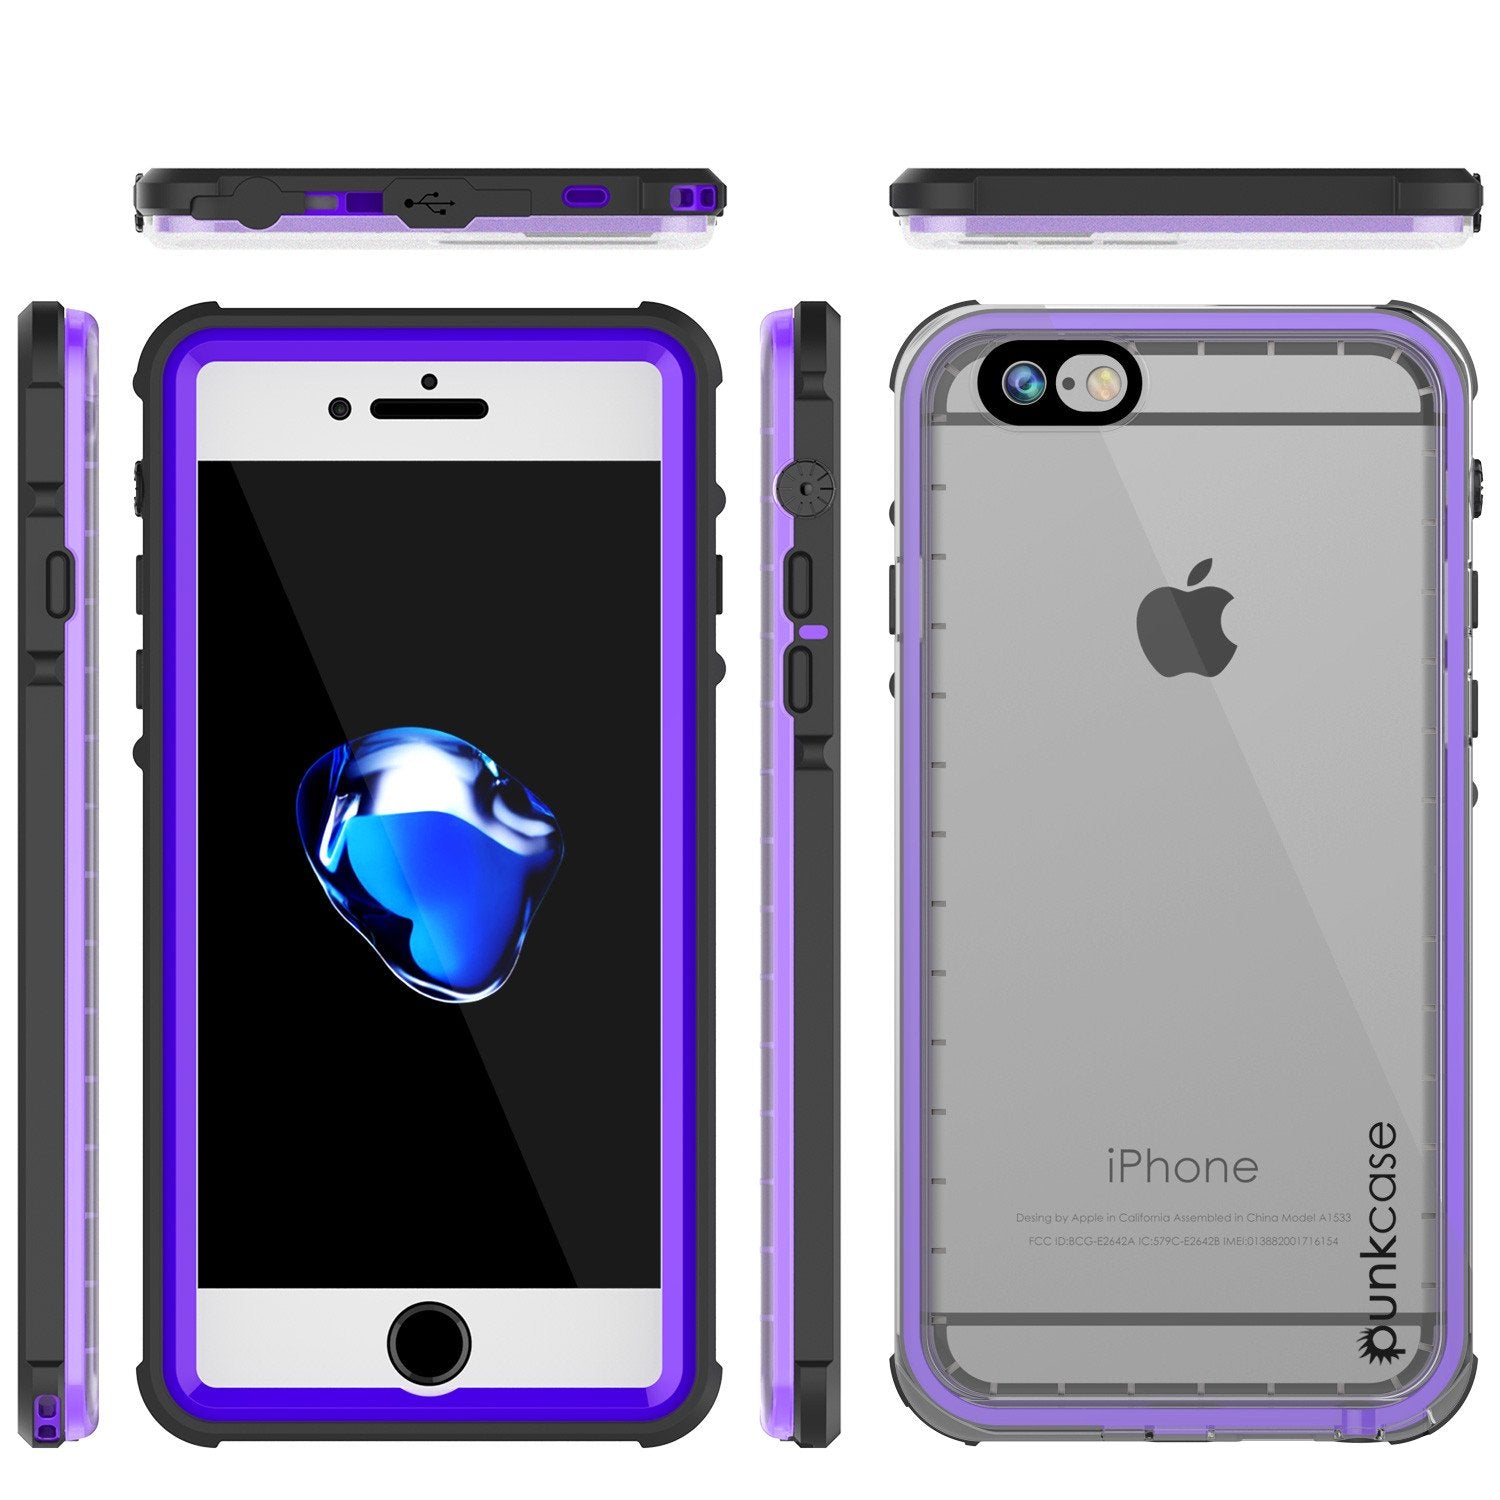 Apple iPhone 7 Waterproof Case, PUNKcase CRYSTAL Purple W/ Attached Screen Protector  | Warranty - PunkCase NZ